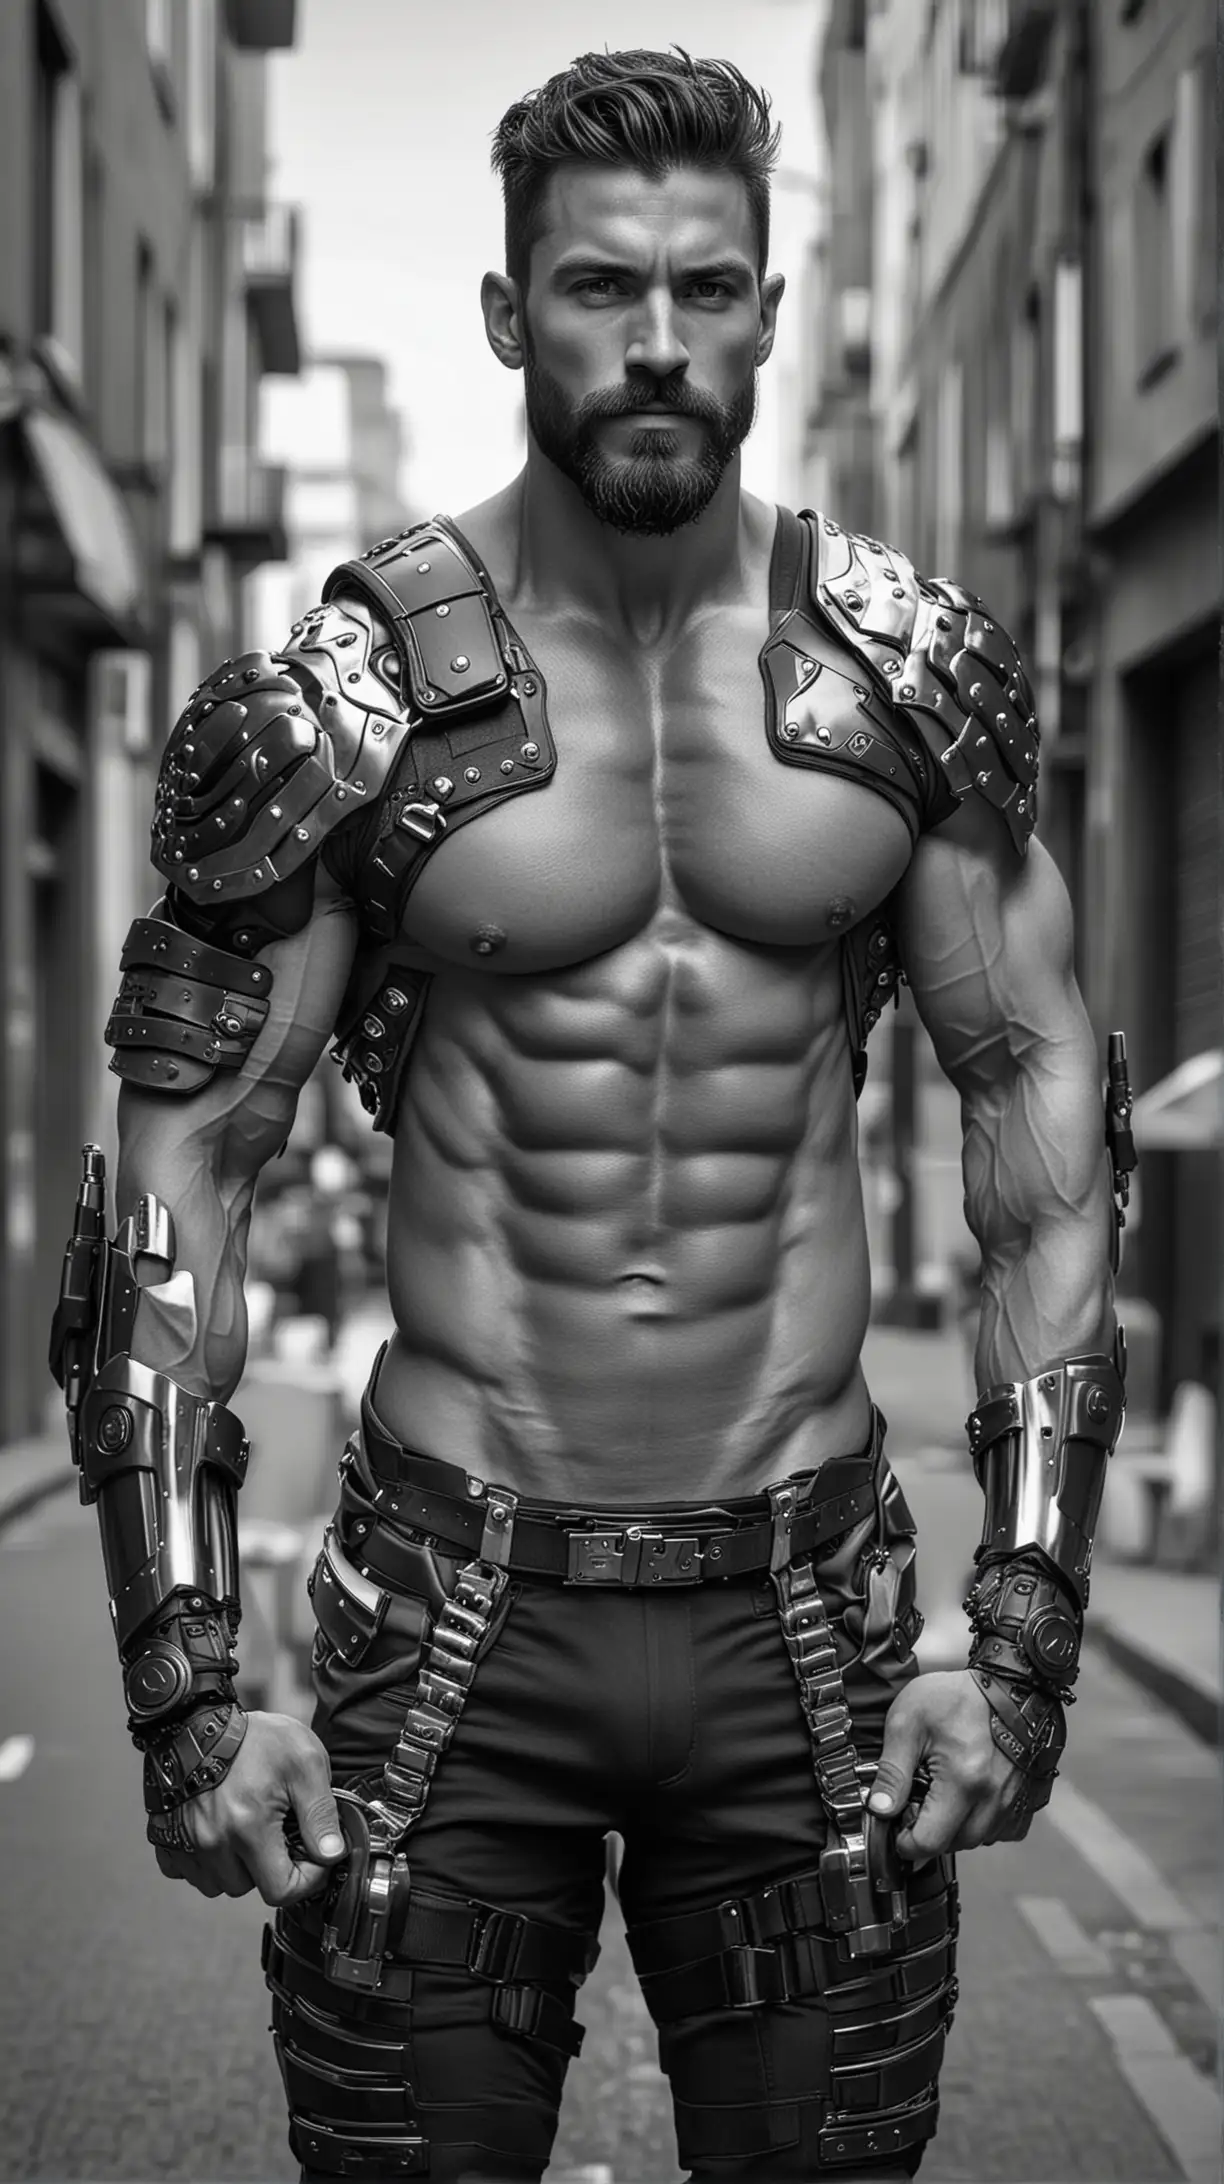 Muscular Bodybuilder in Futuristic Armor Walking on Street